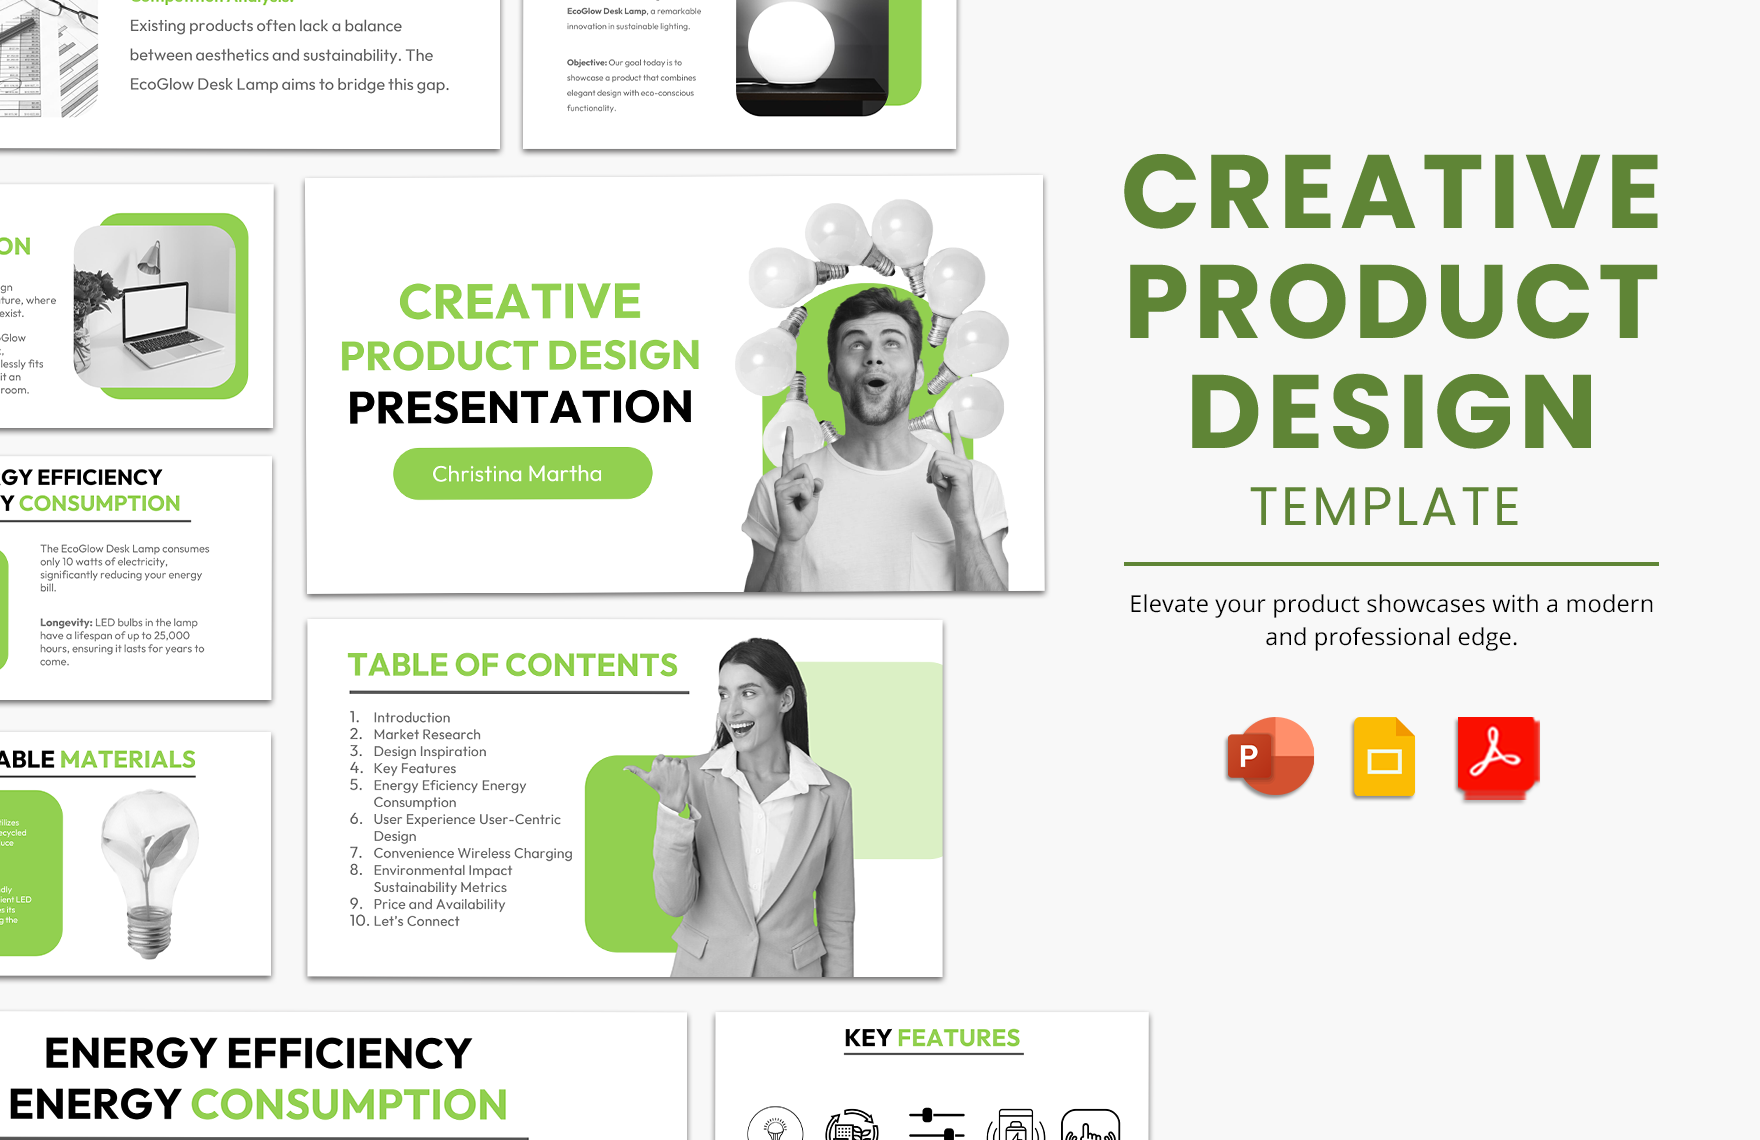 Creative Product Design Template